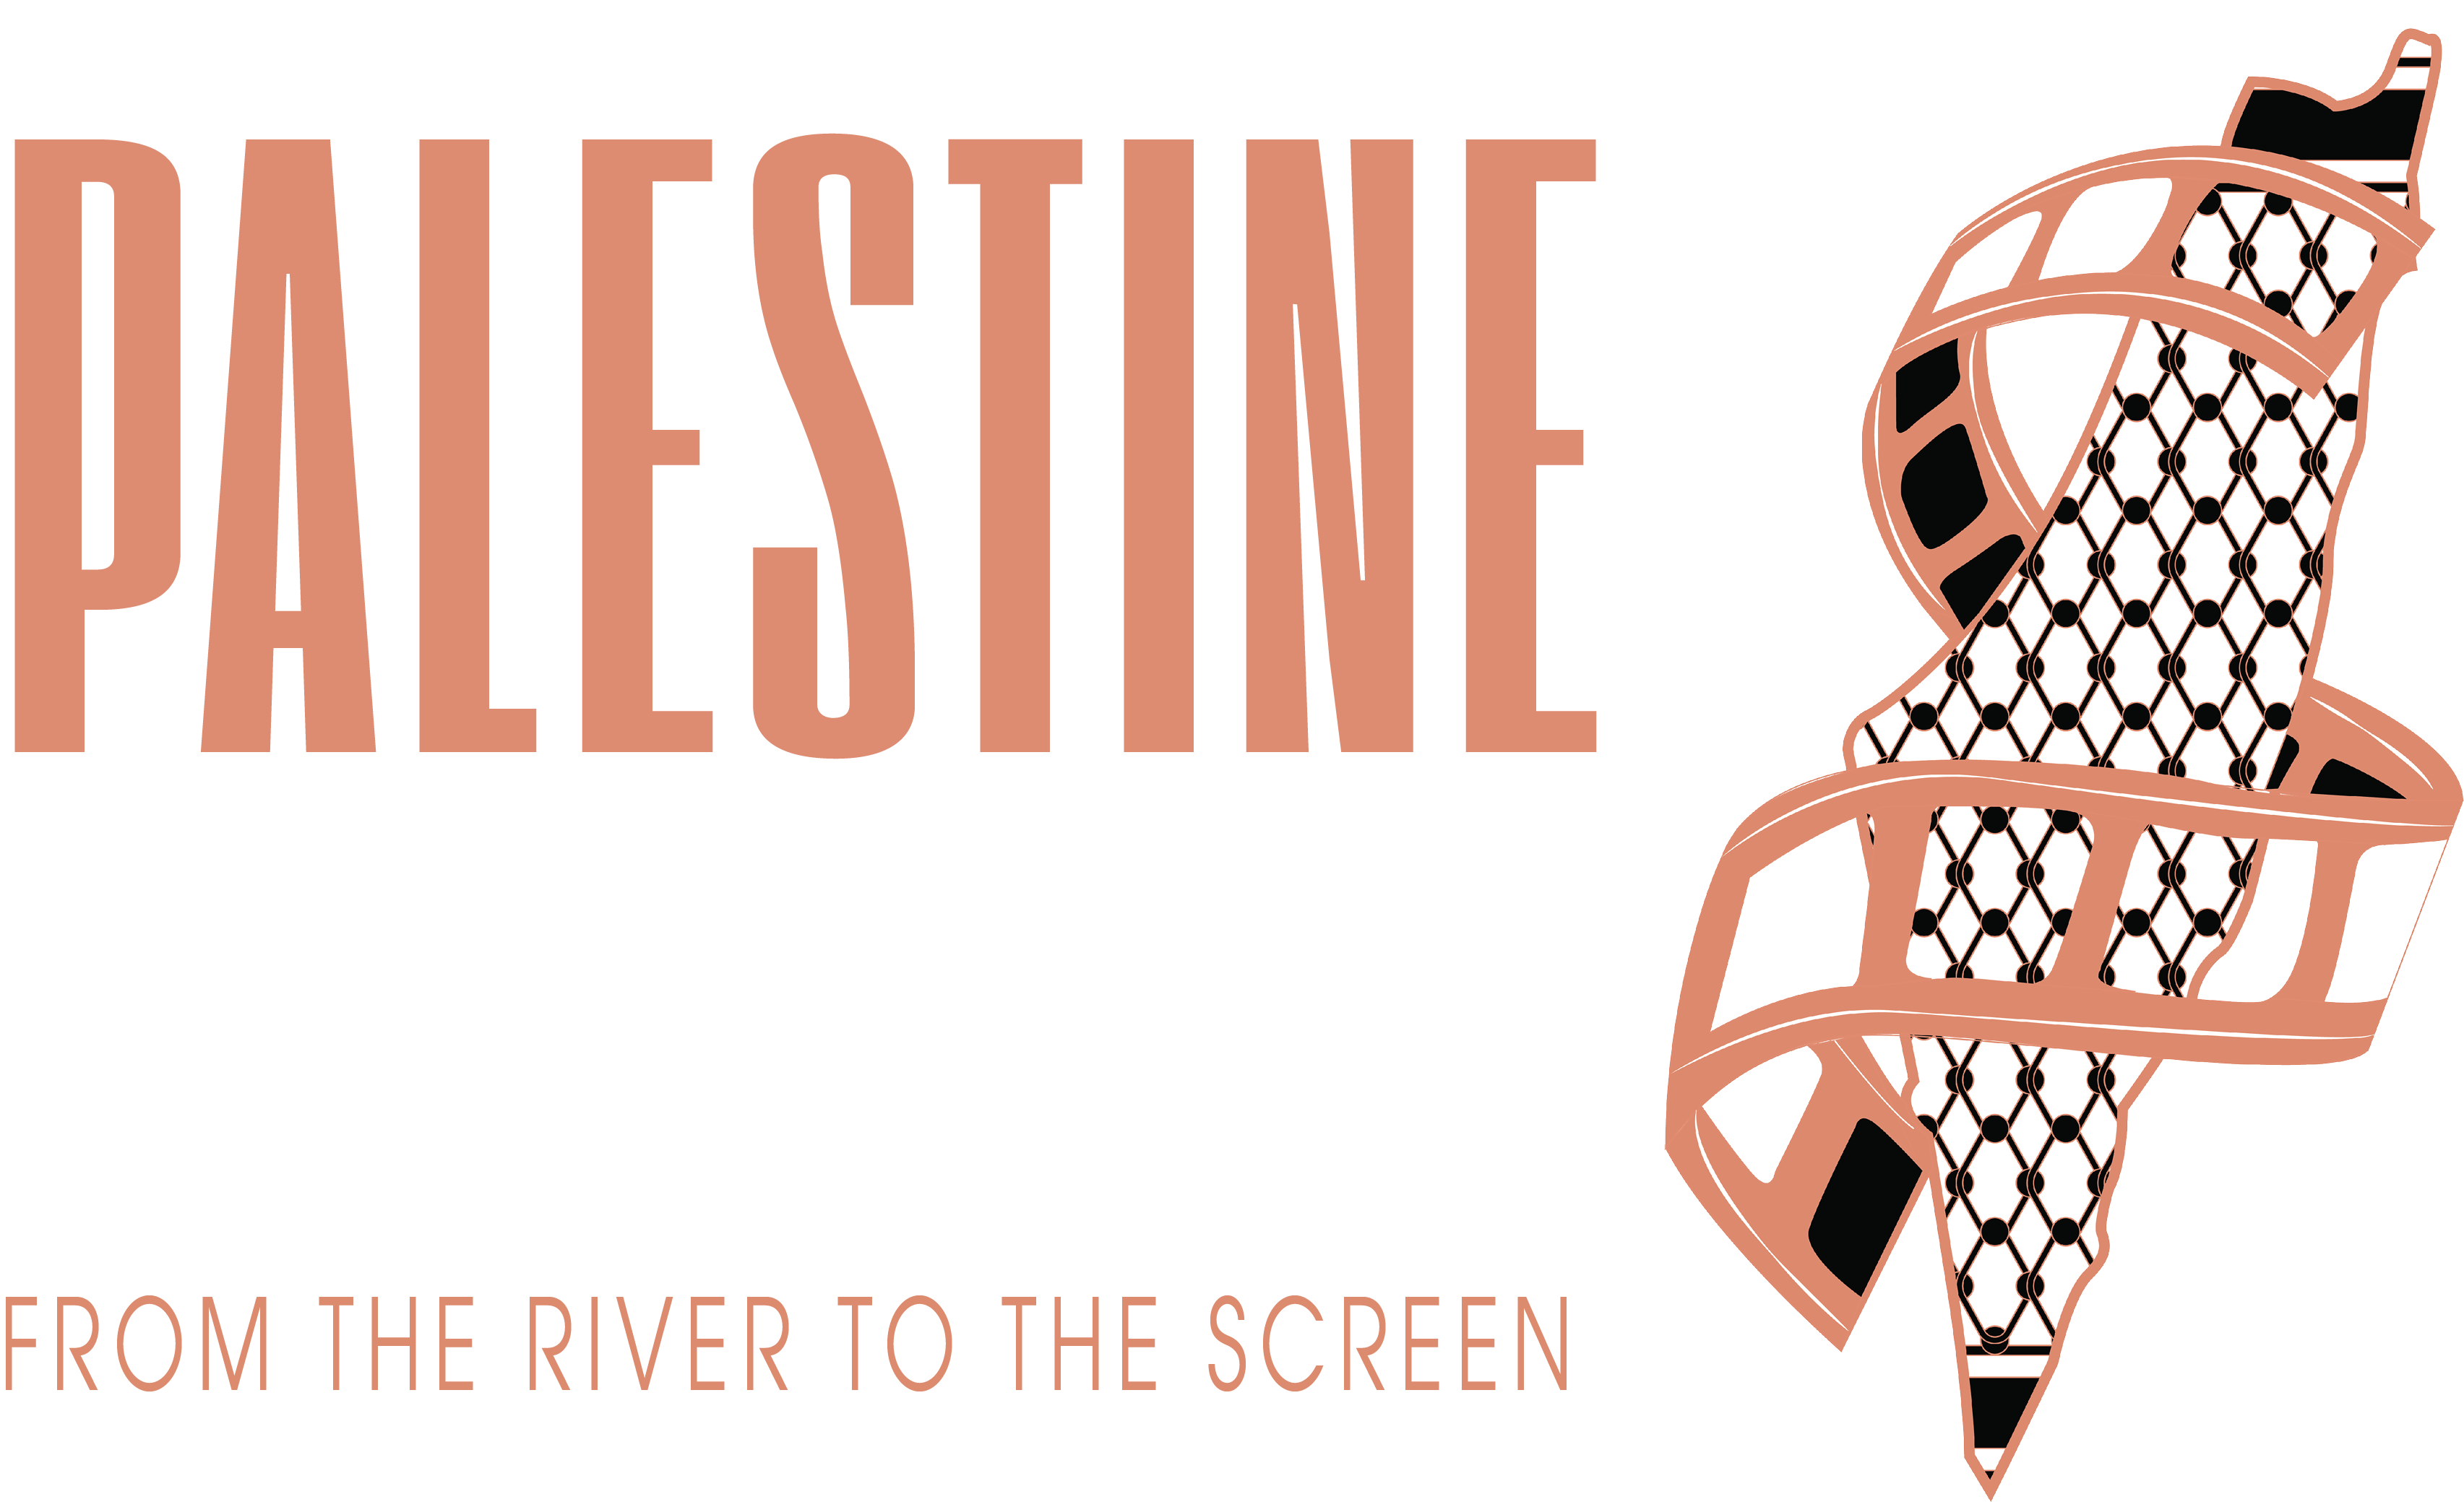 Palestine Film Day